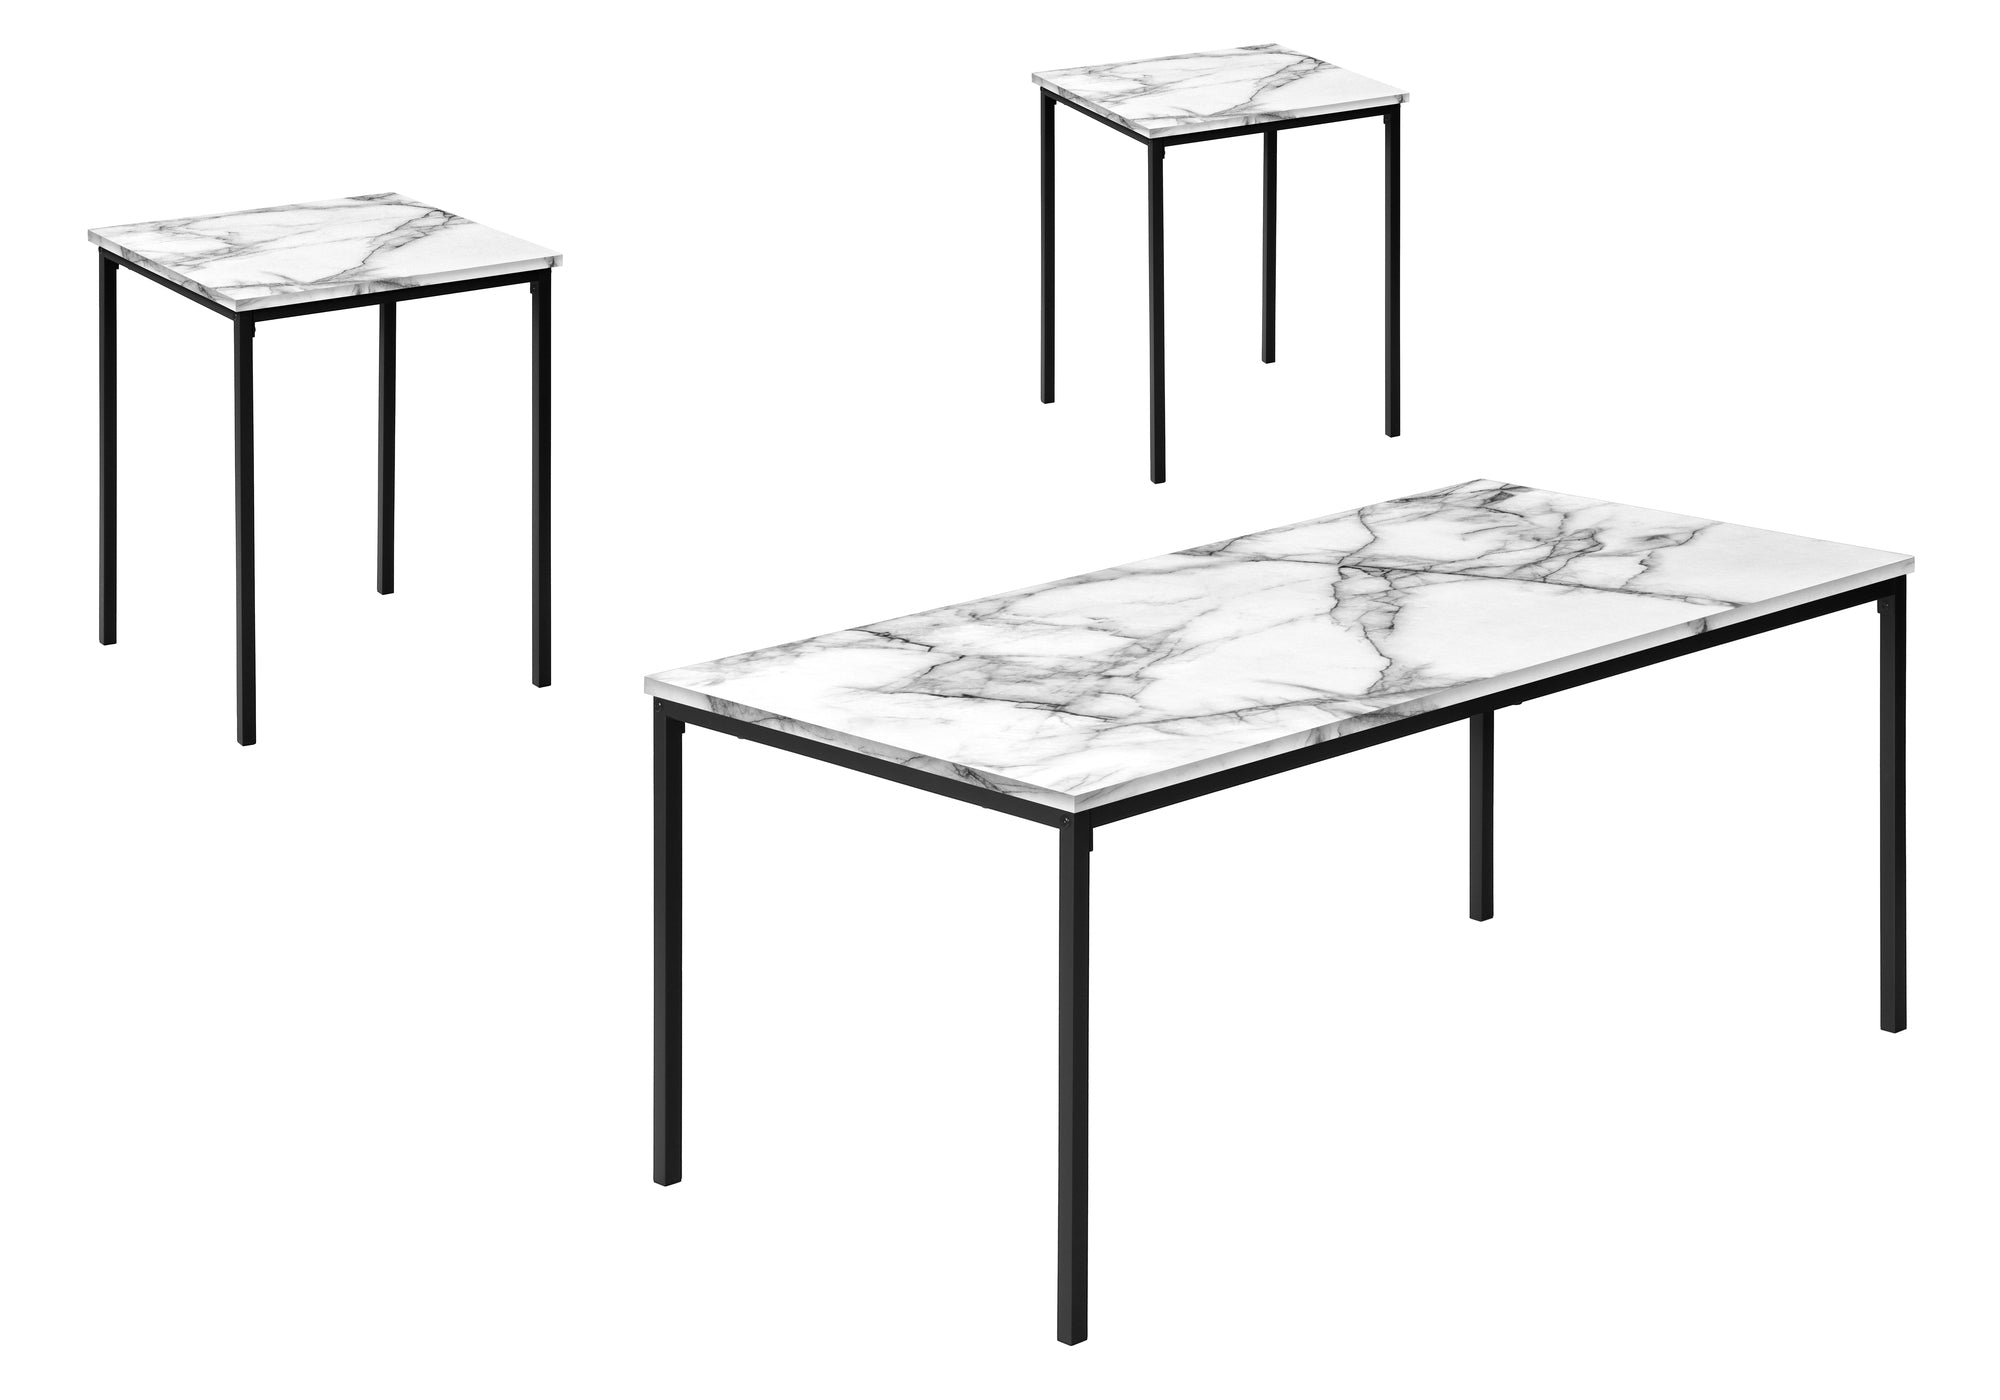 MN-147892P    Table Set, 3pcs Set, Coffee, End, Black Metal, White Marble Look Laminate, Contemporary, Modern